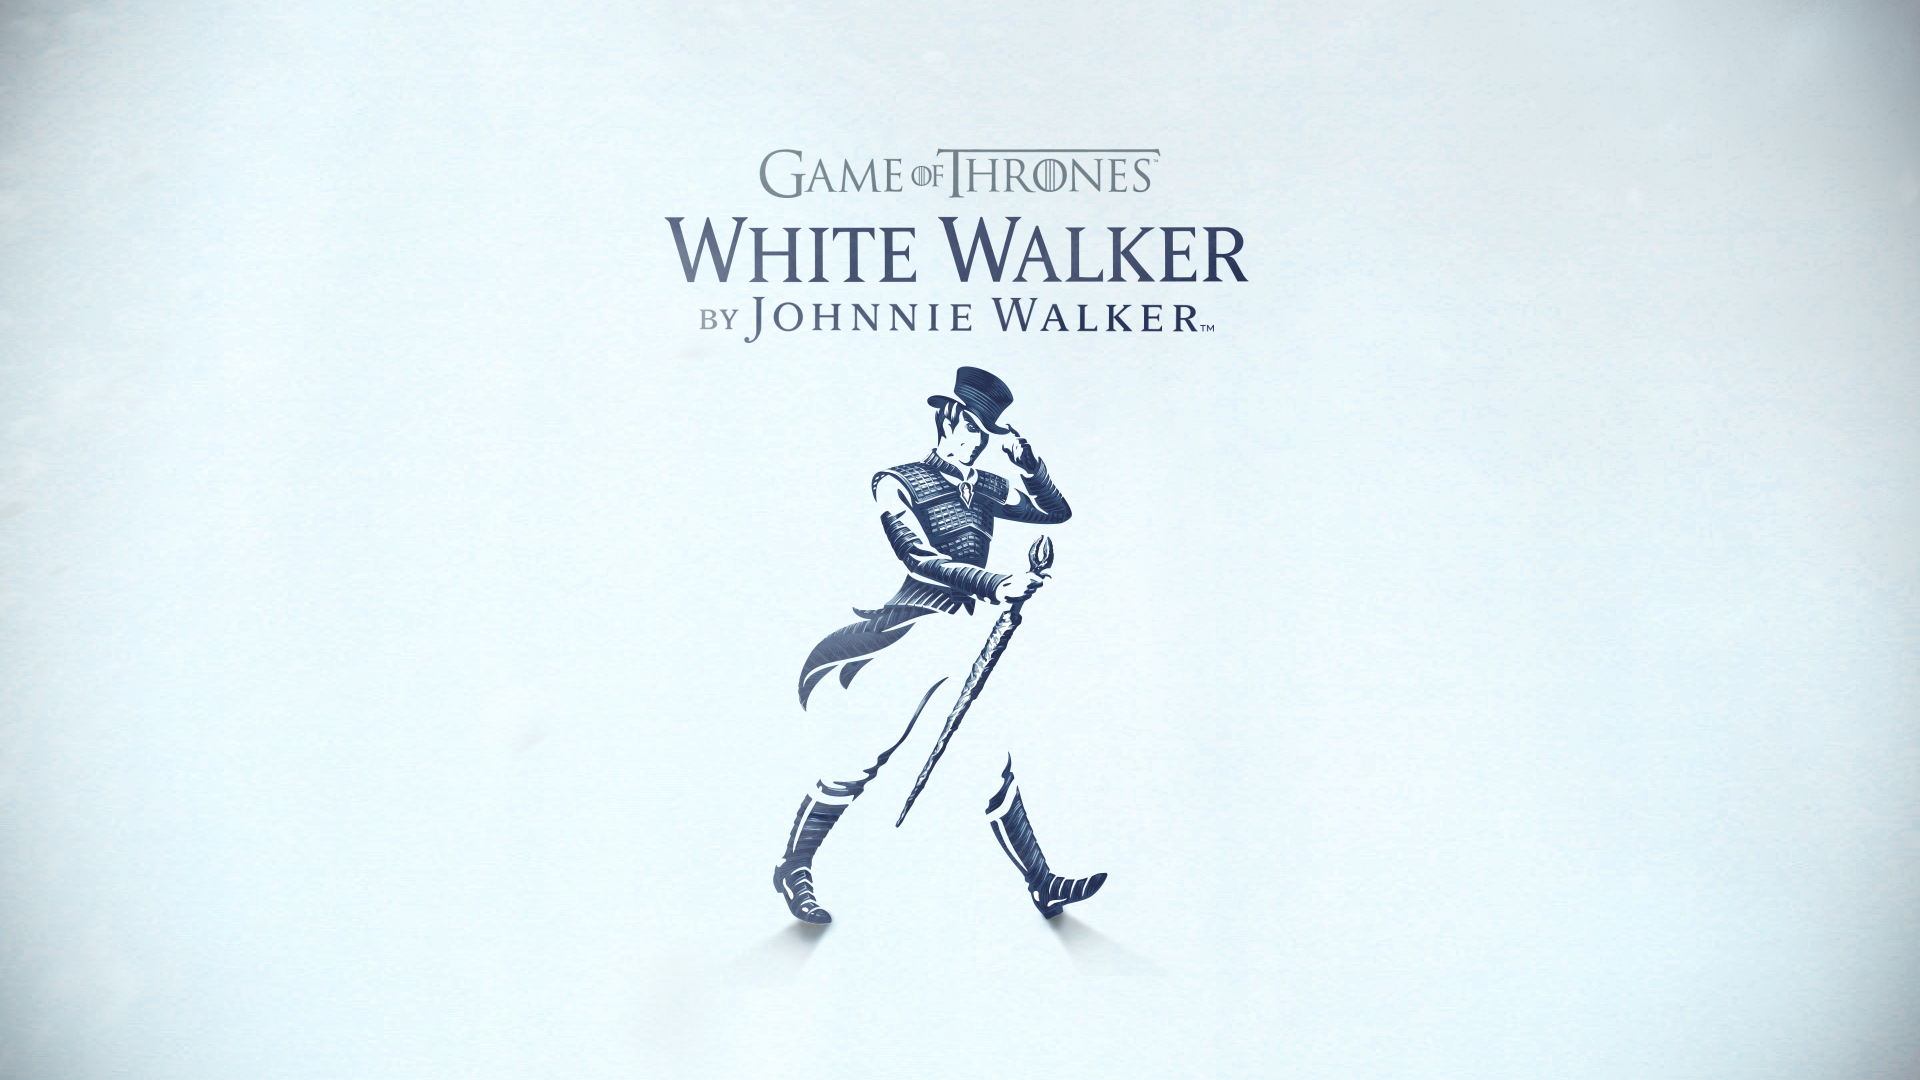 Whisky Johnnie Walker Game Of Thrones 1920x1080